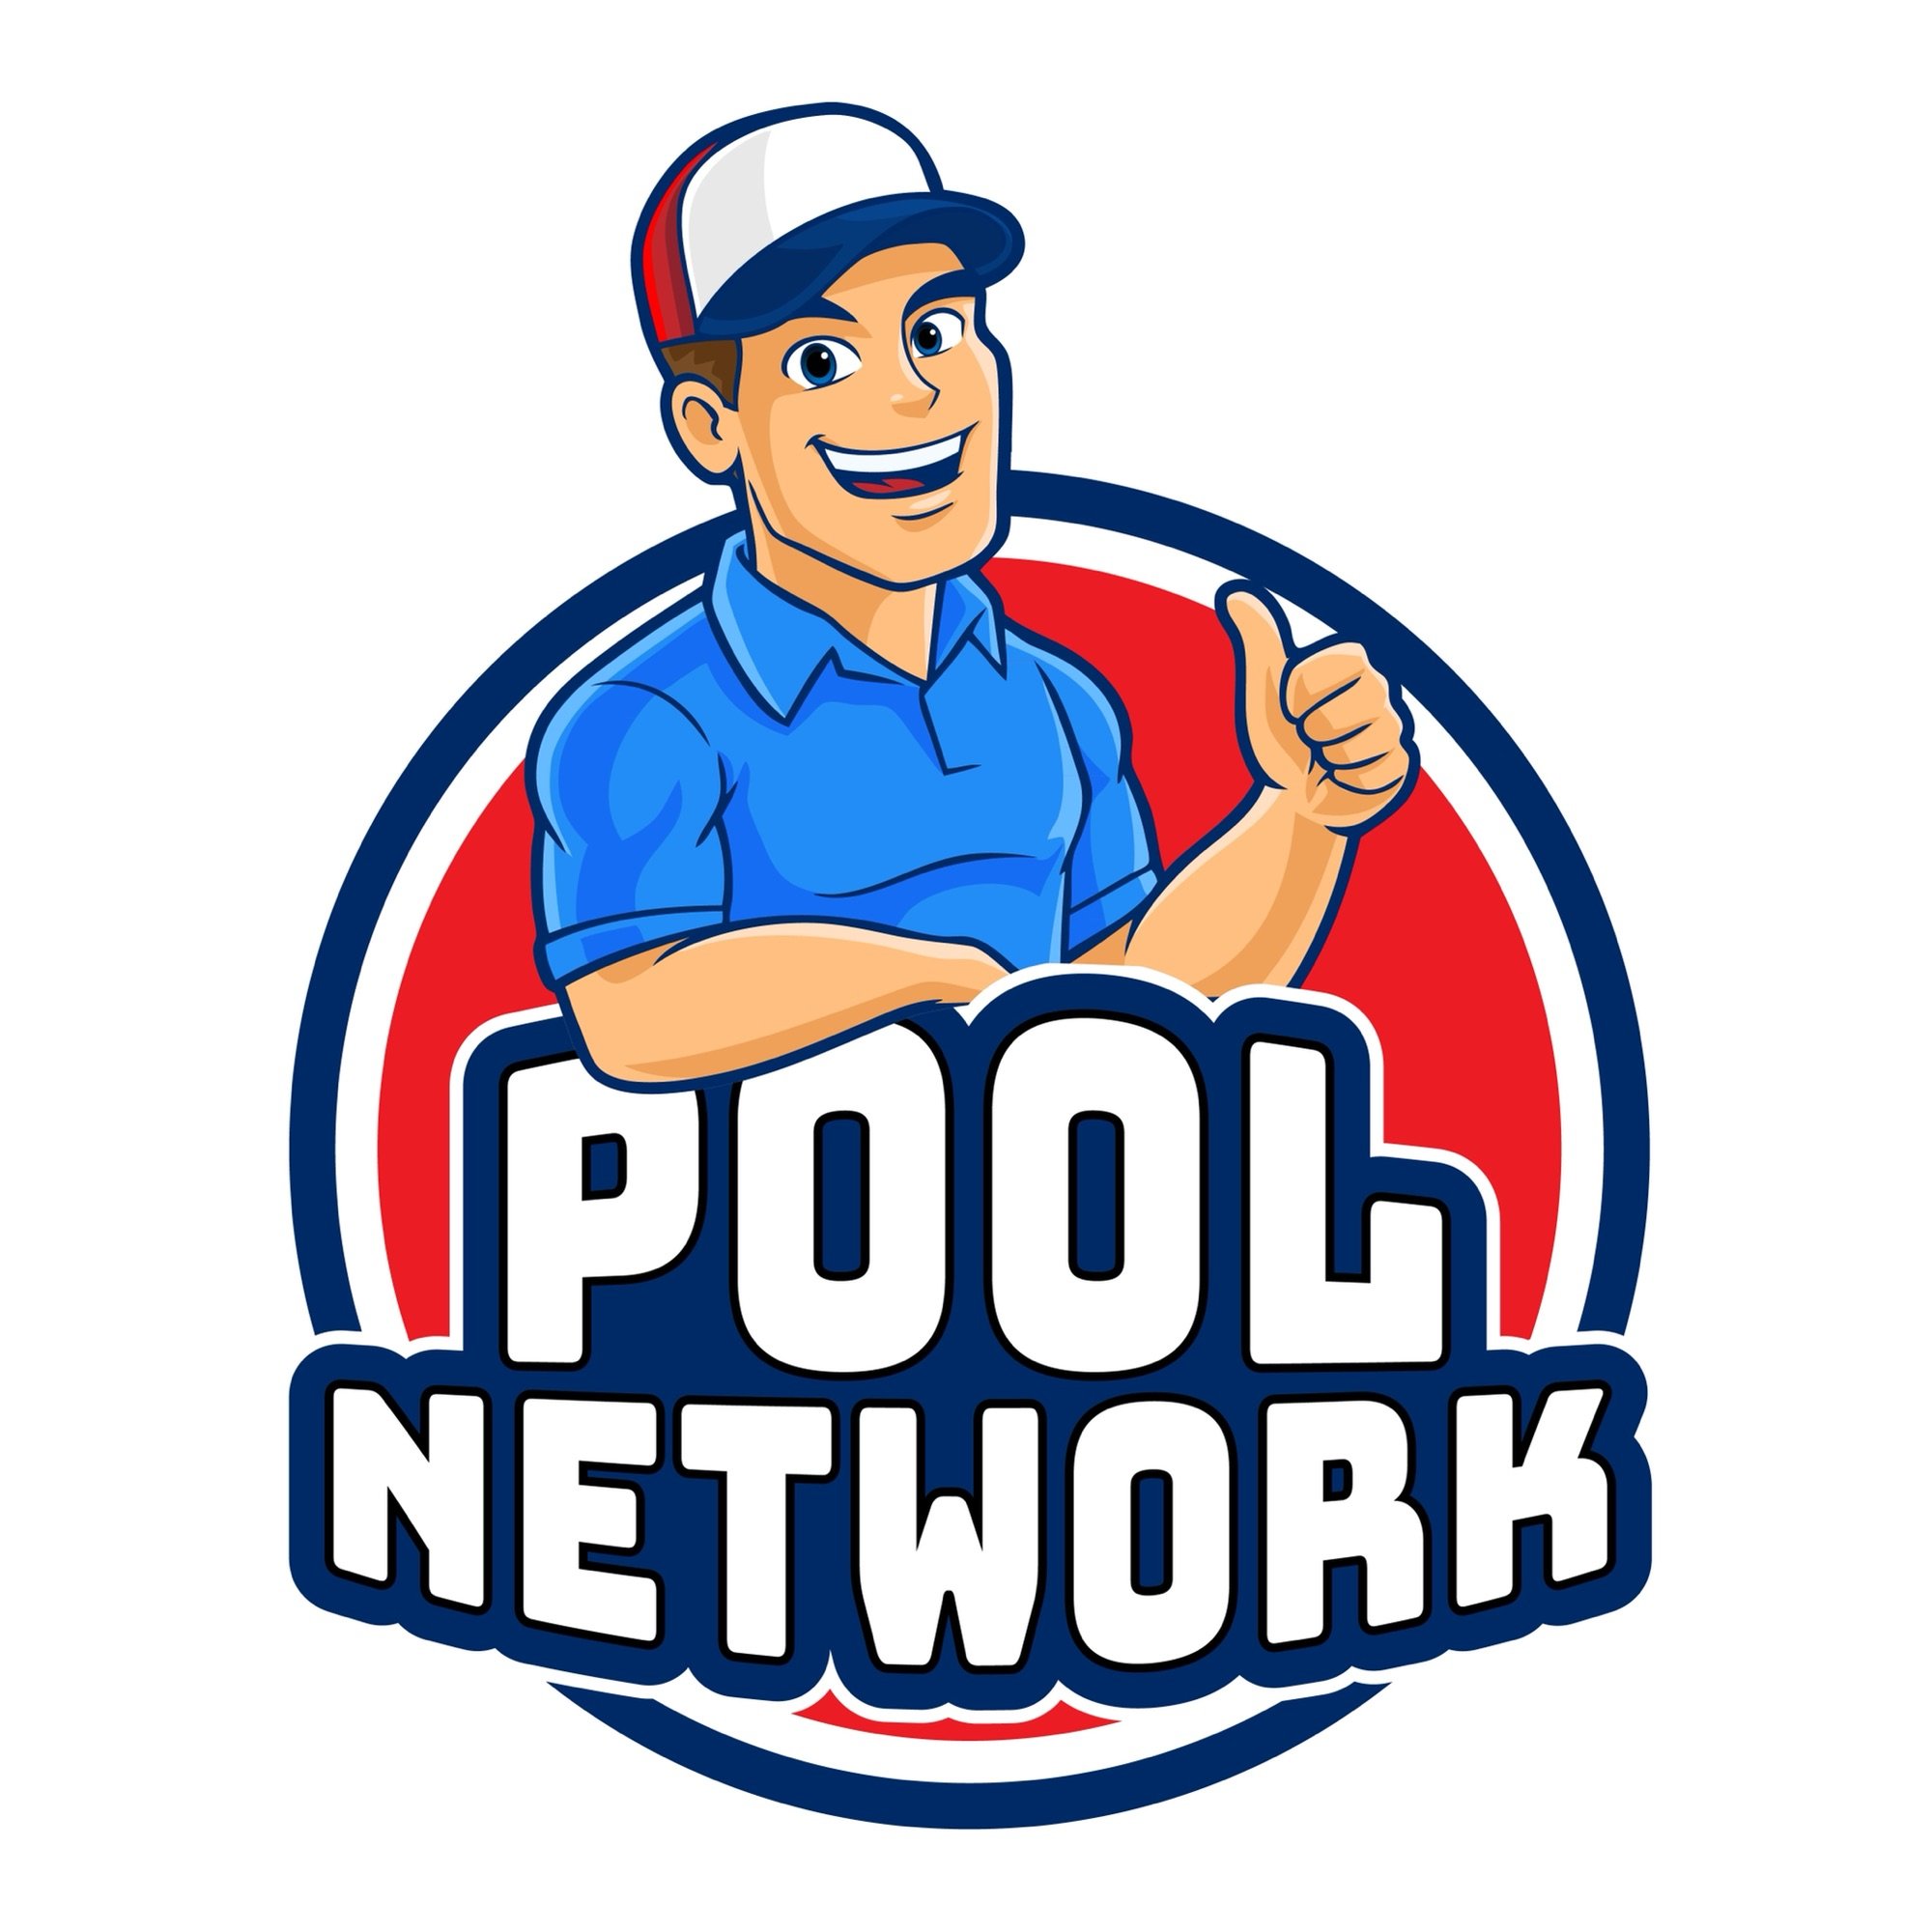 Pool Network Logo